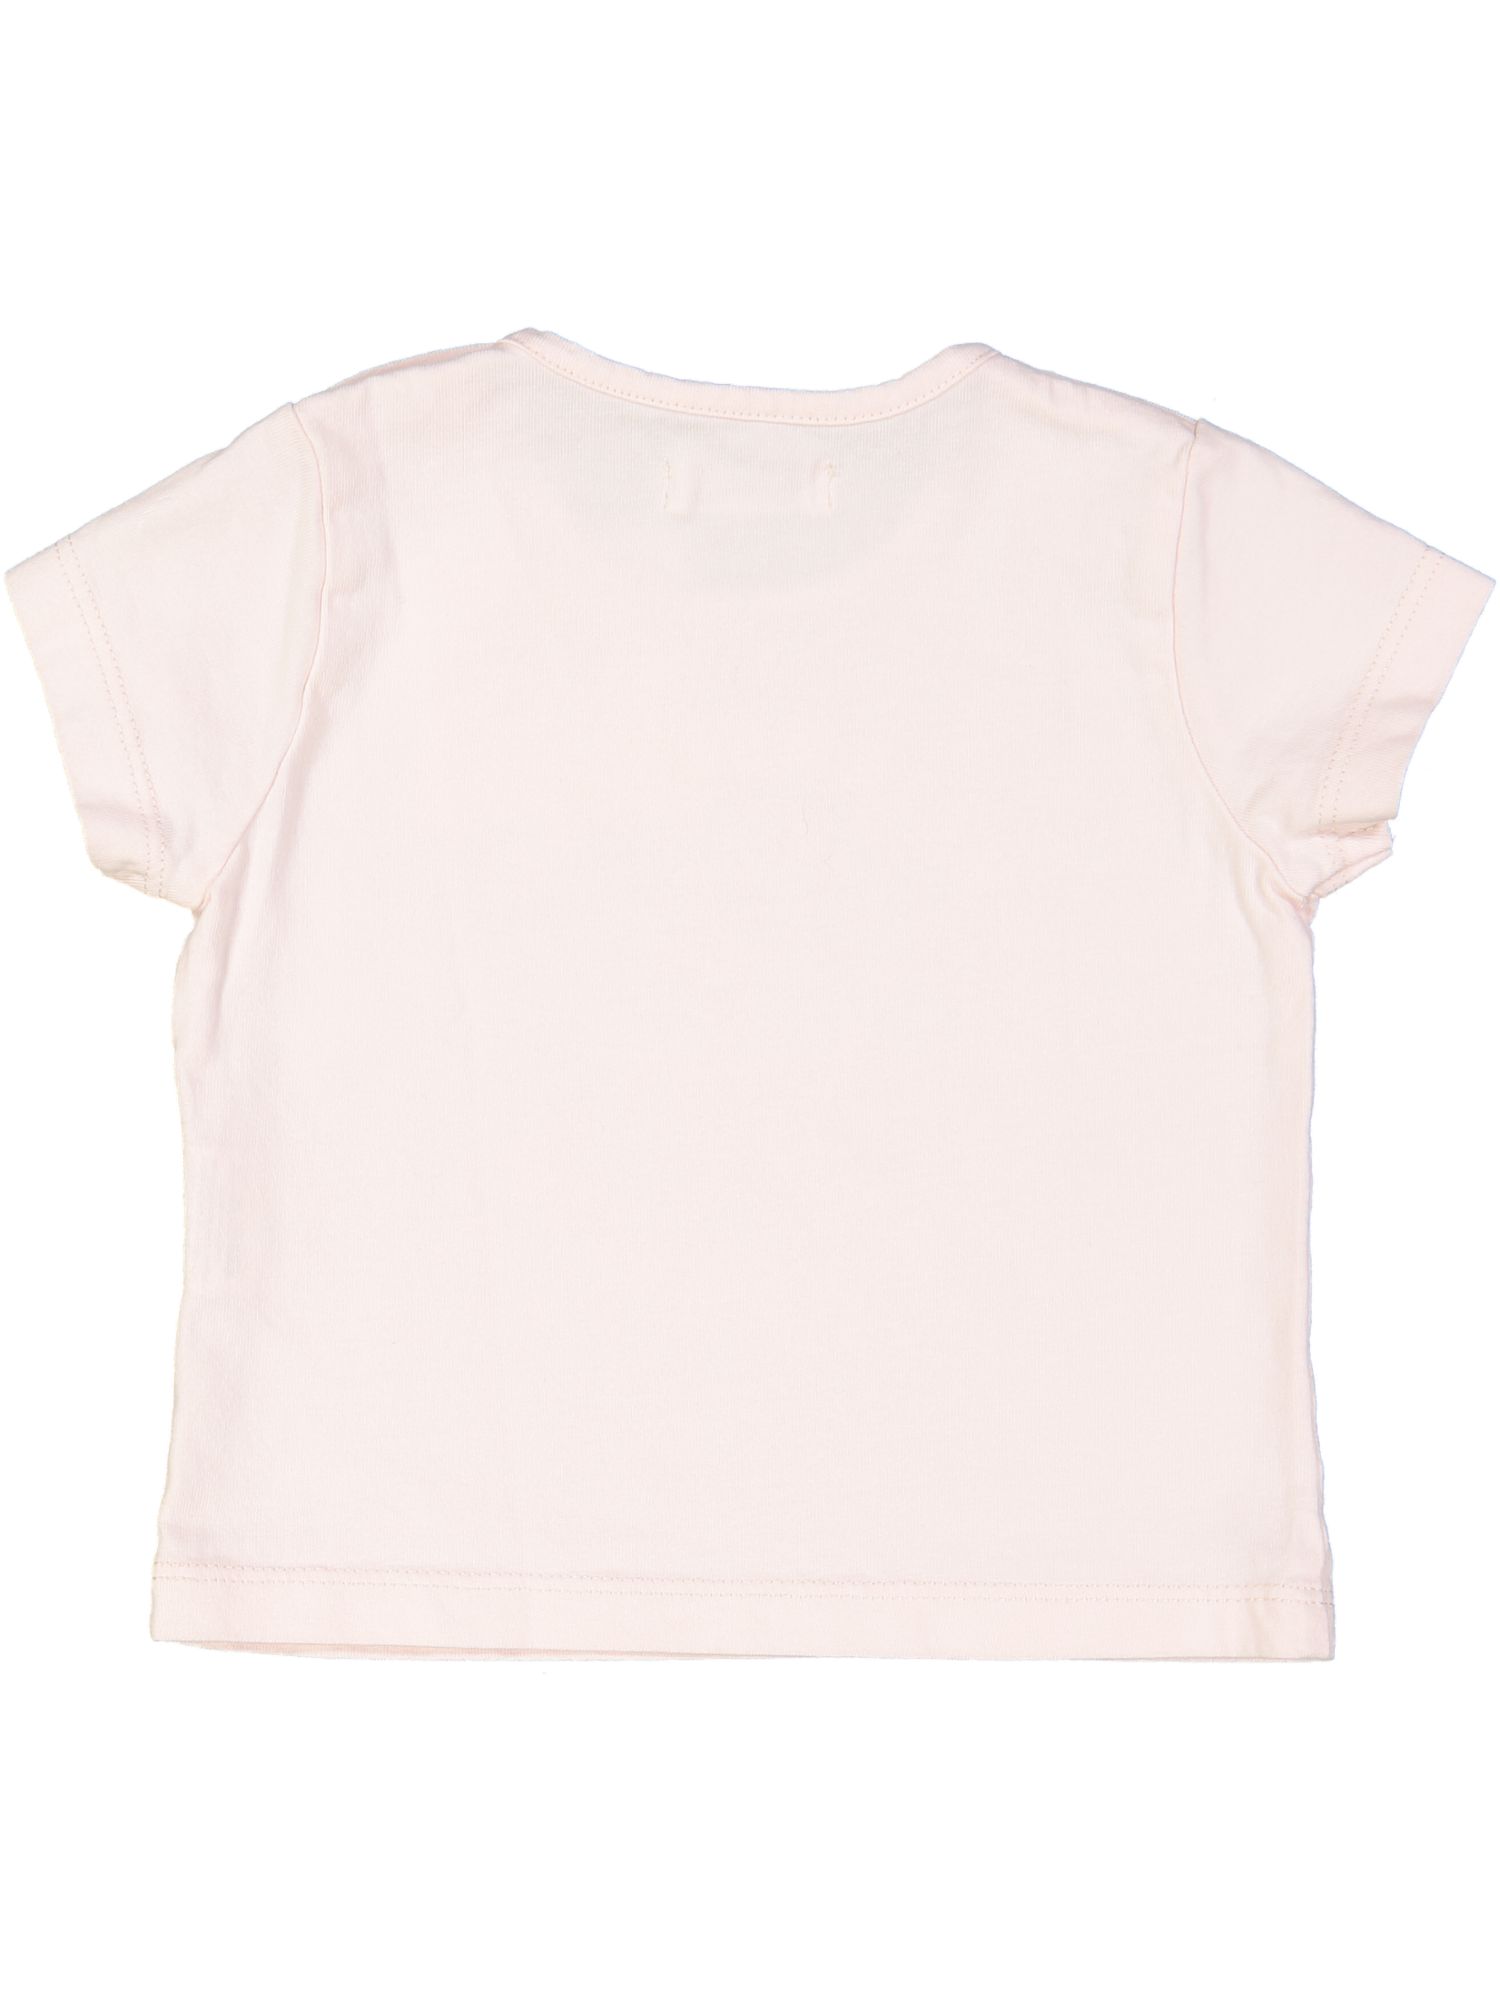 t-shirt roze metamorfose 03m .